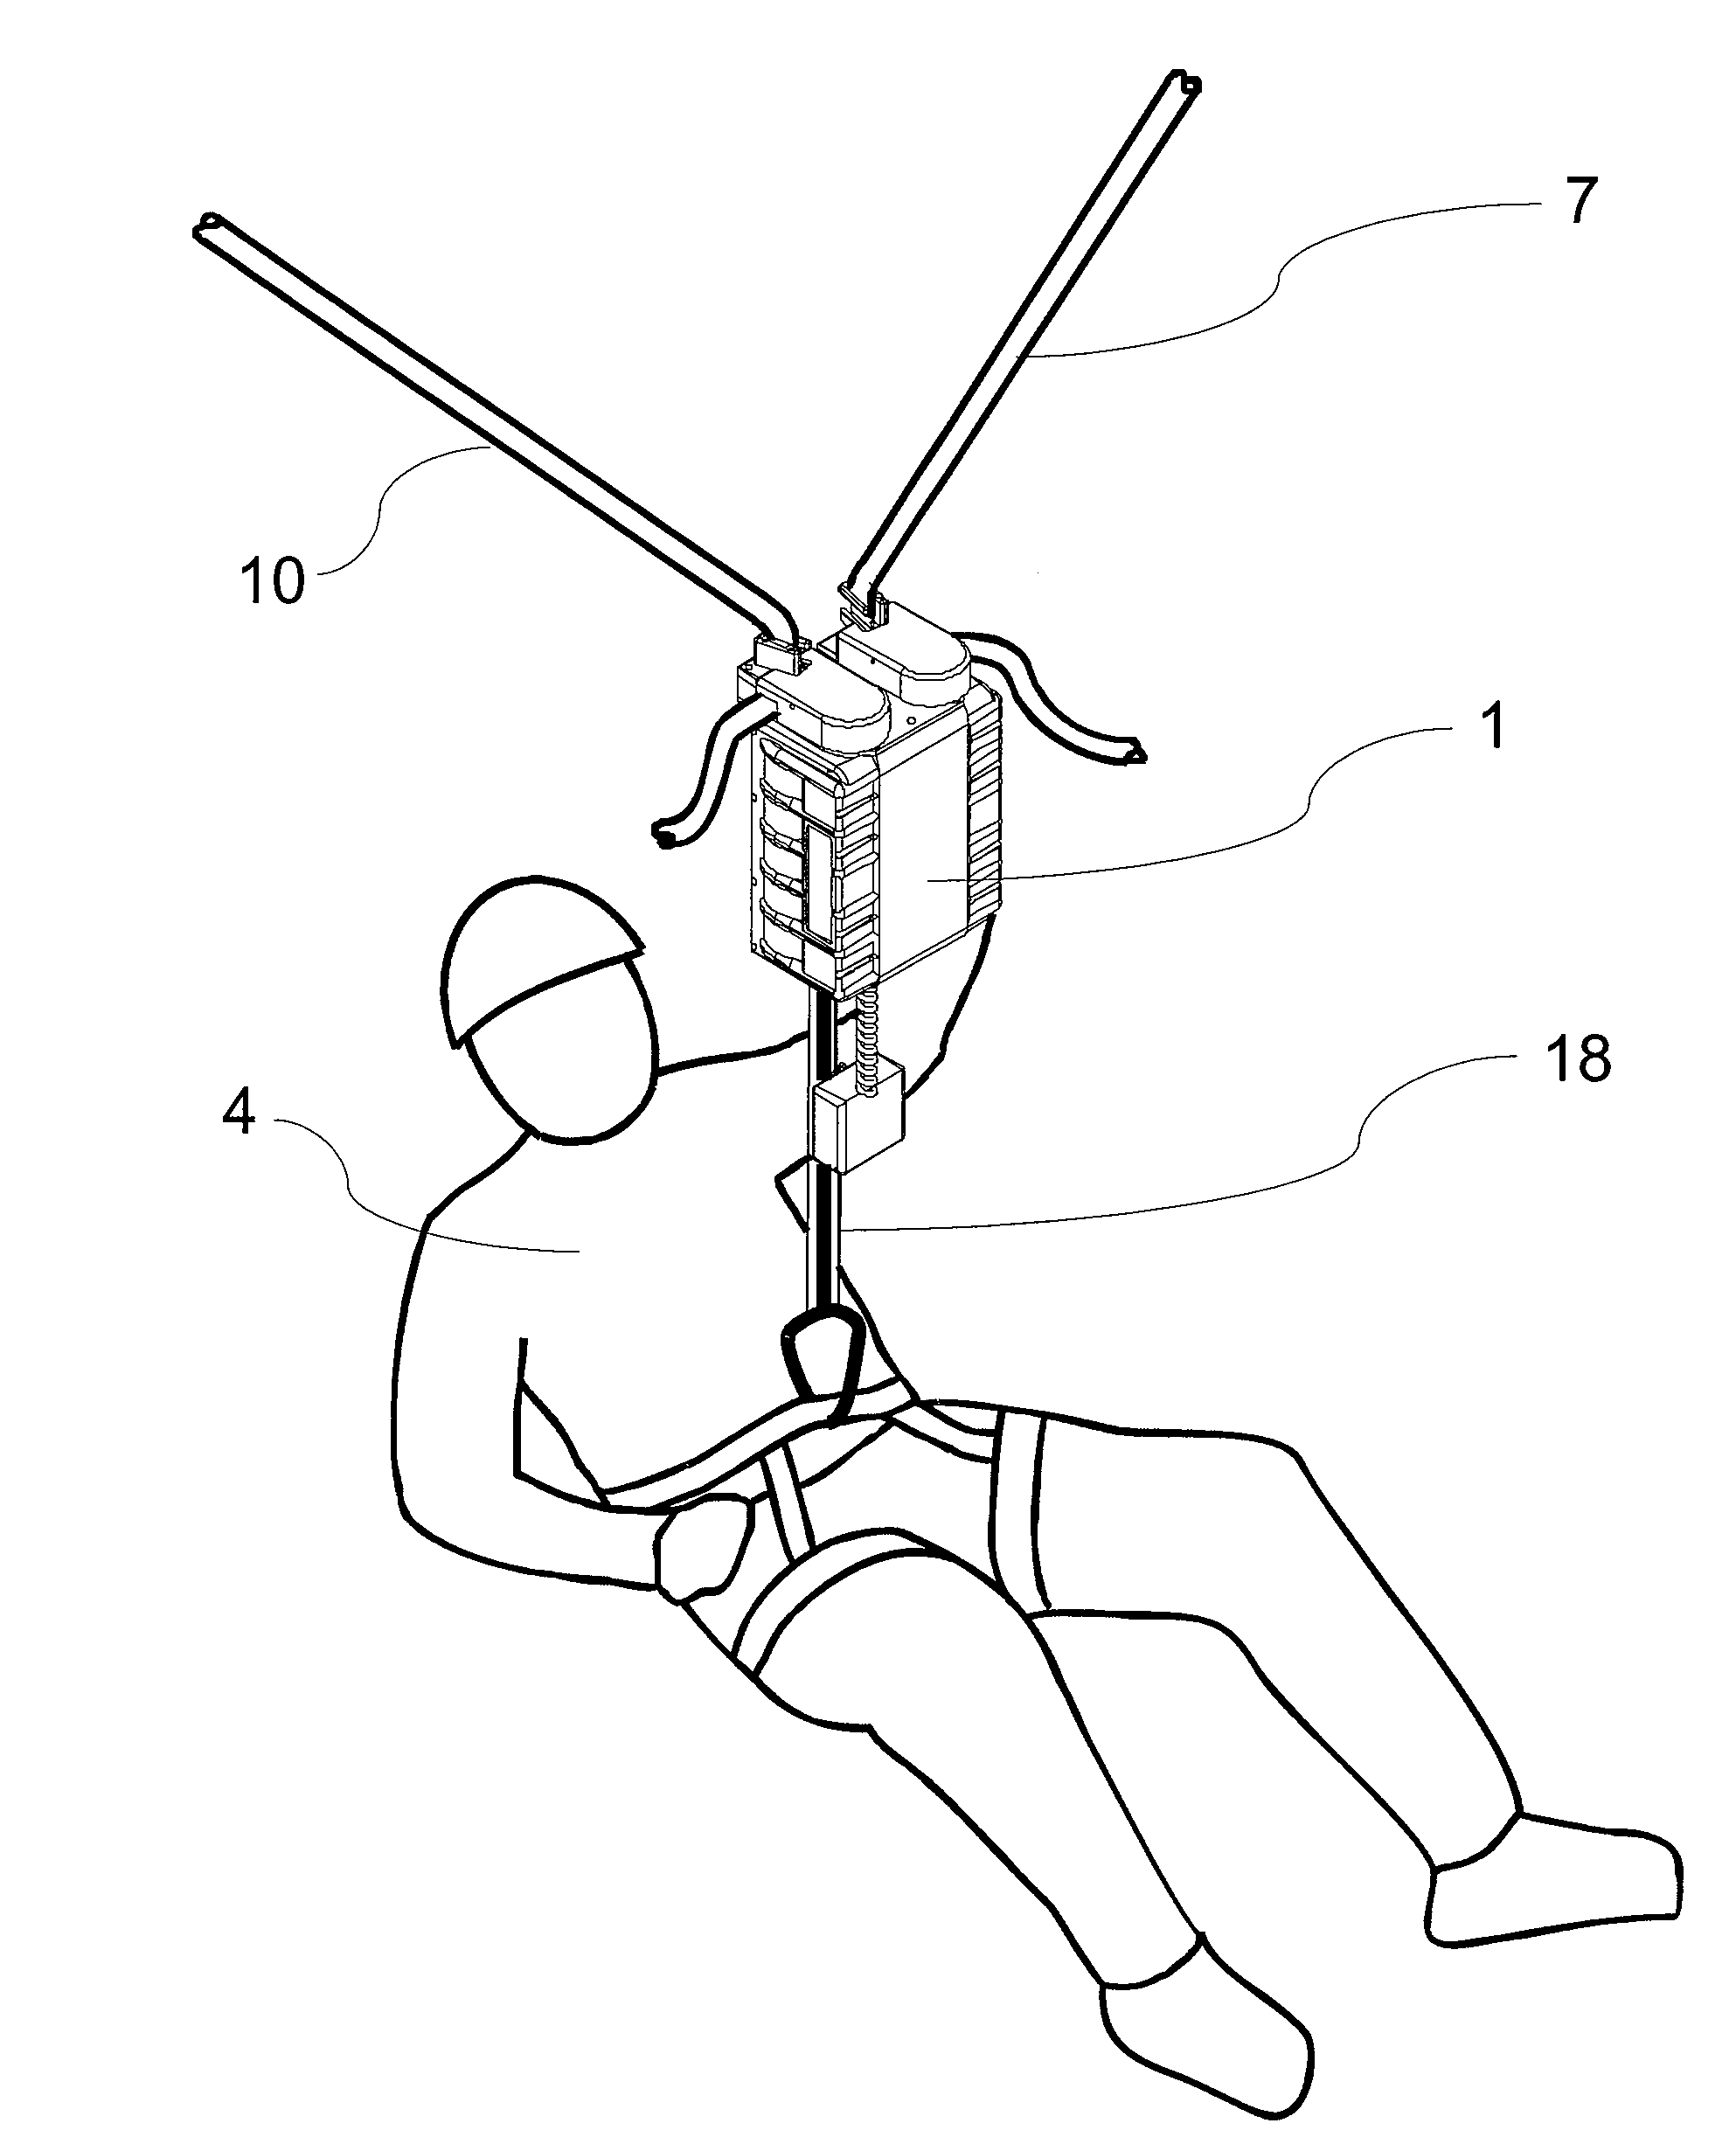 Multiple line powered rope ascender and portable hoist